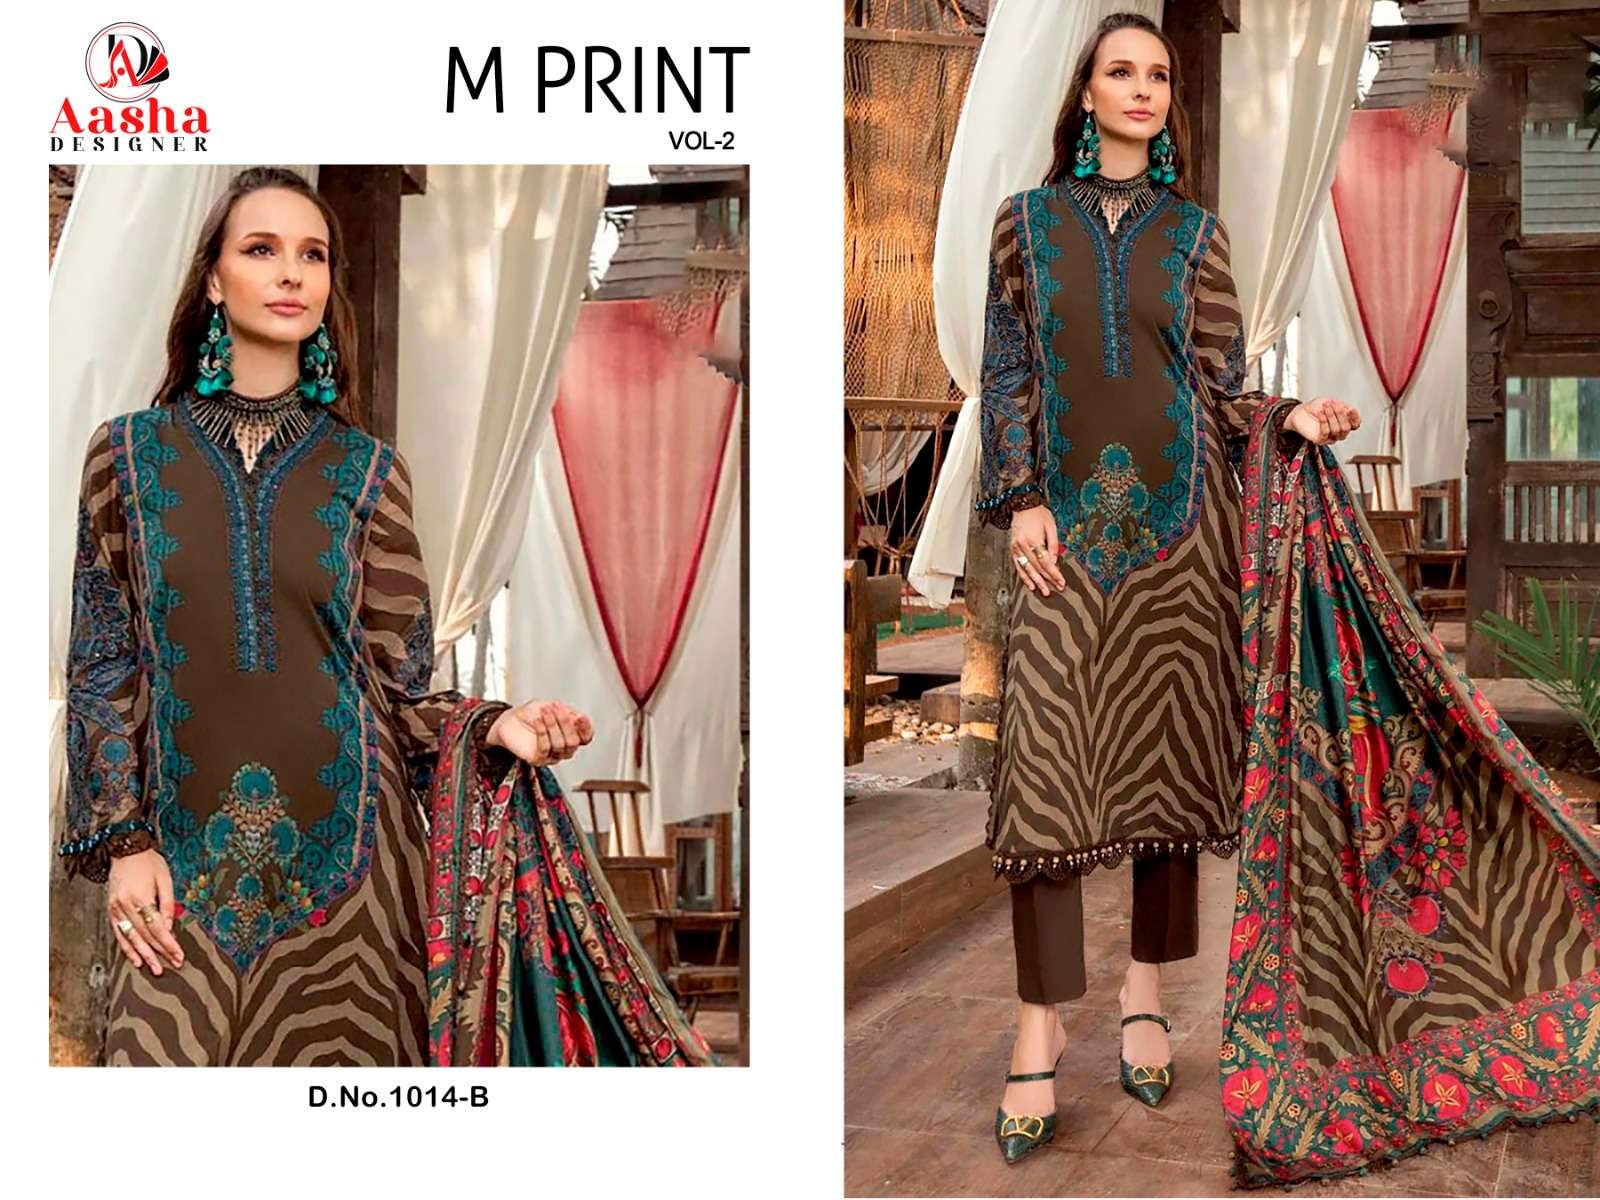 aasha designer m print vol-2 1014 colour series latest designer pakistani salwar kameez at wholesale price surat gujarat